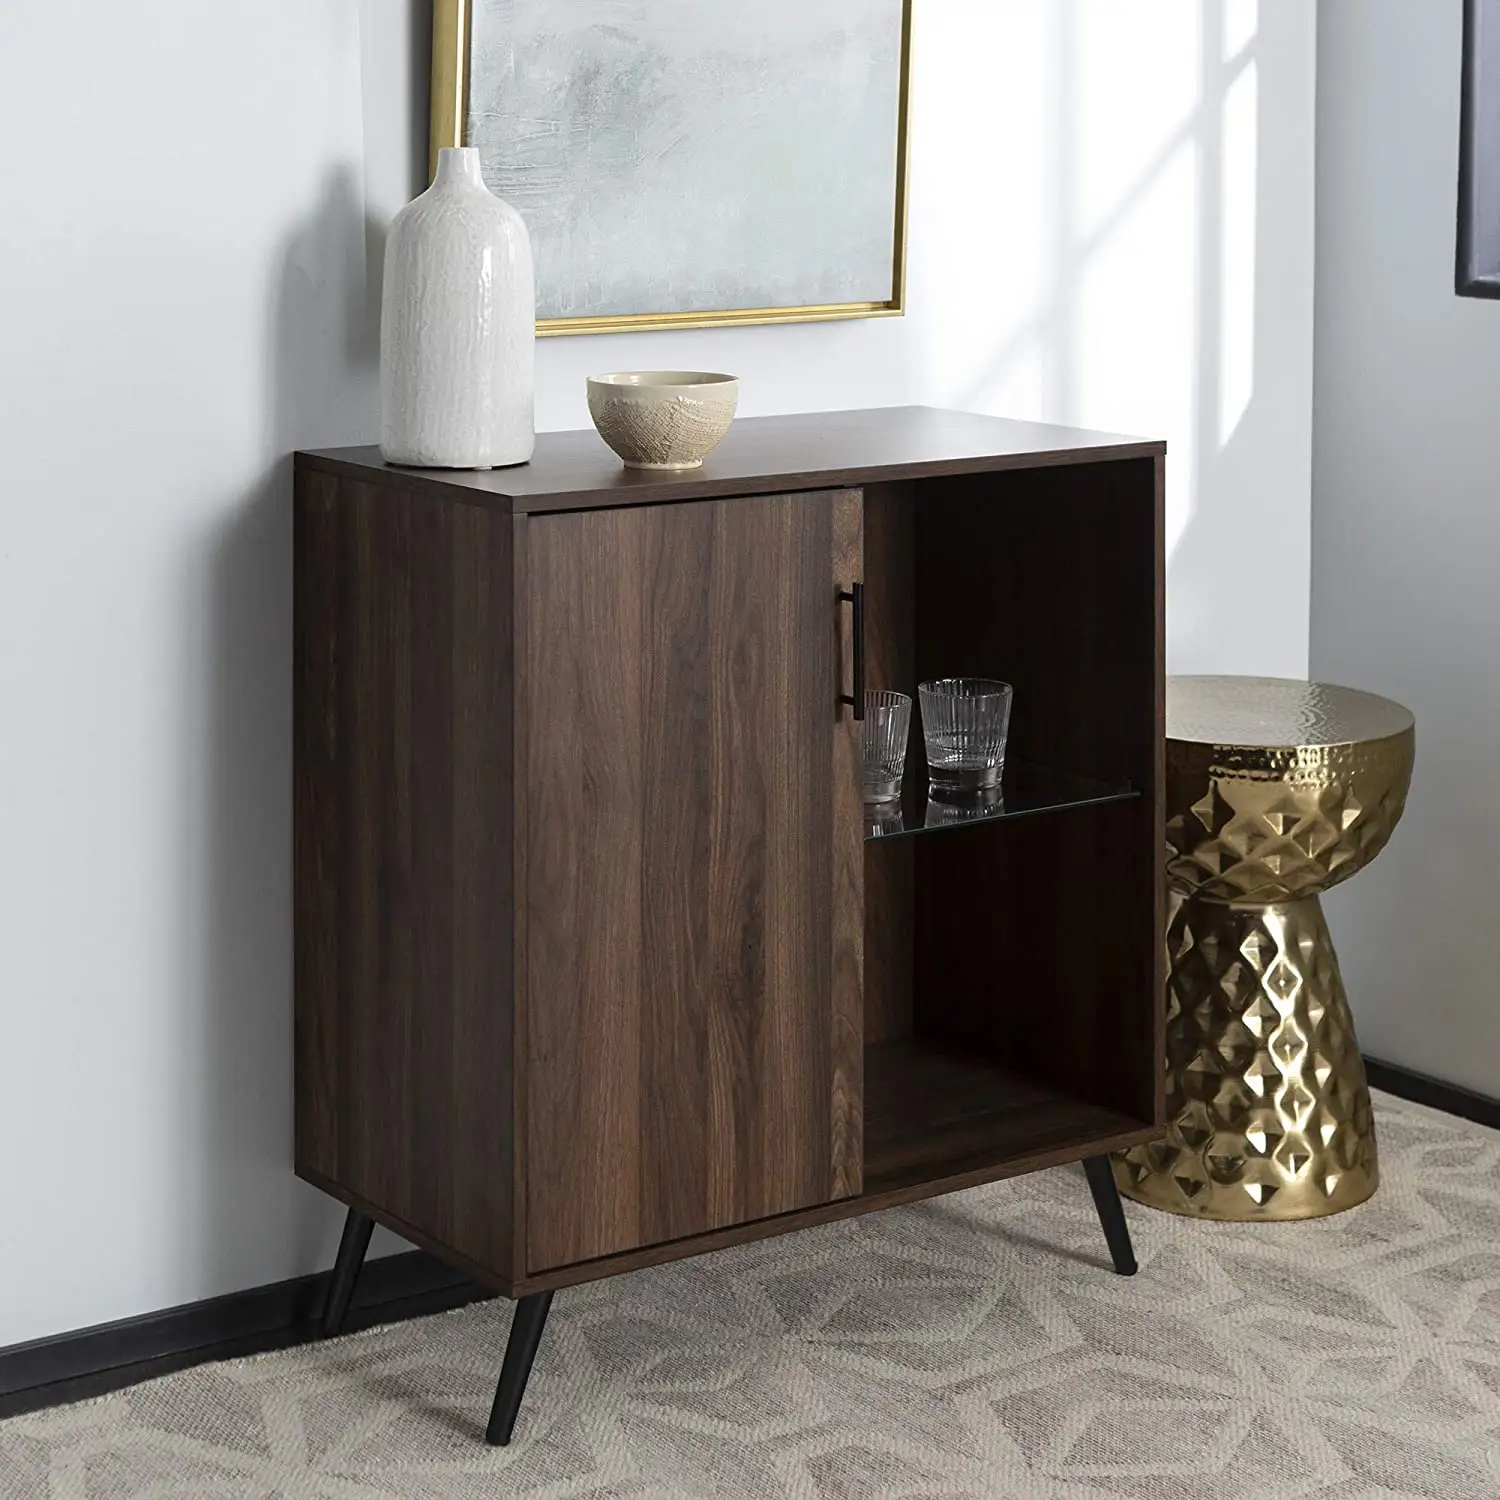 Walnut Panel Wood Furniture Glass Shelf Wine Corner Cabinet Bar For Living Room